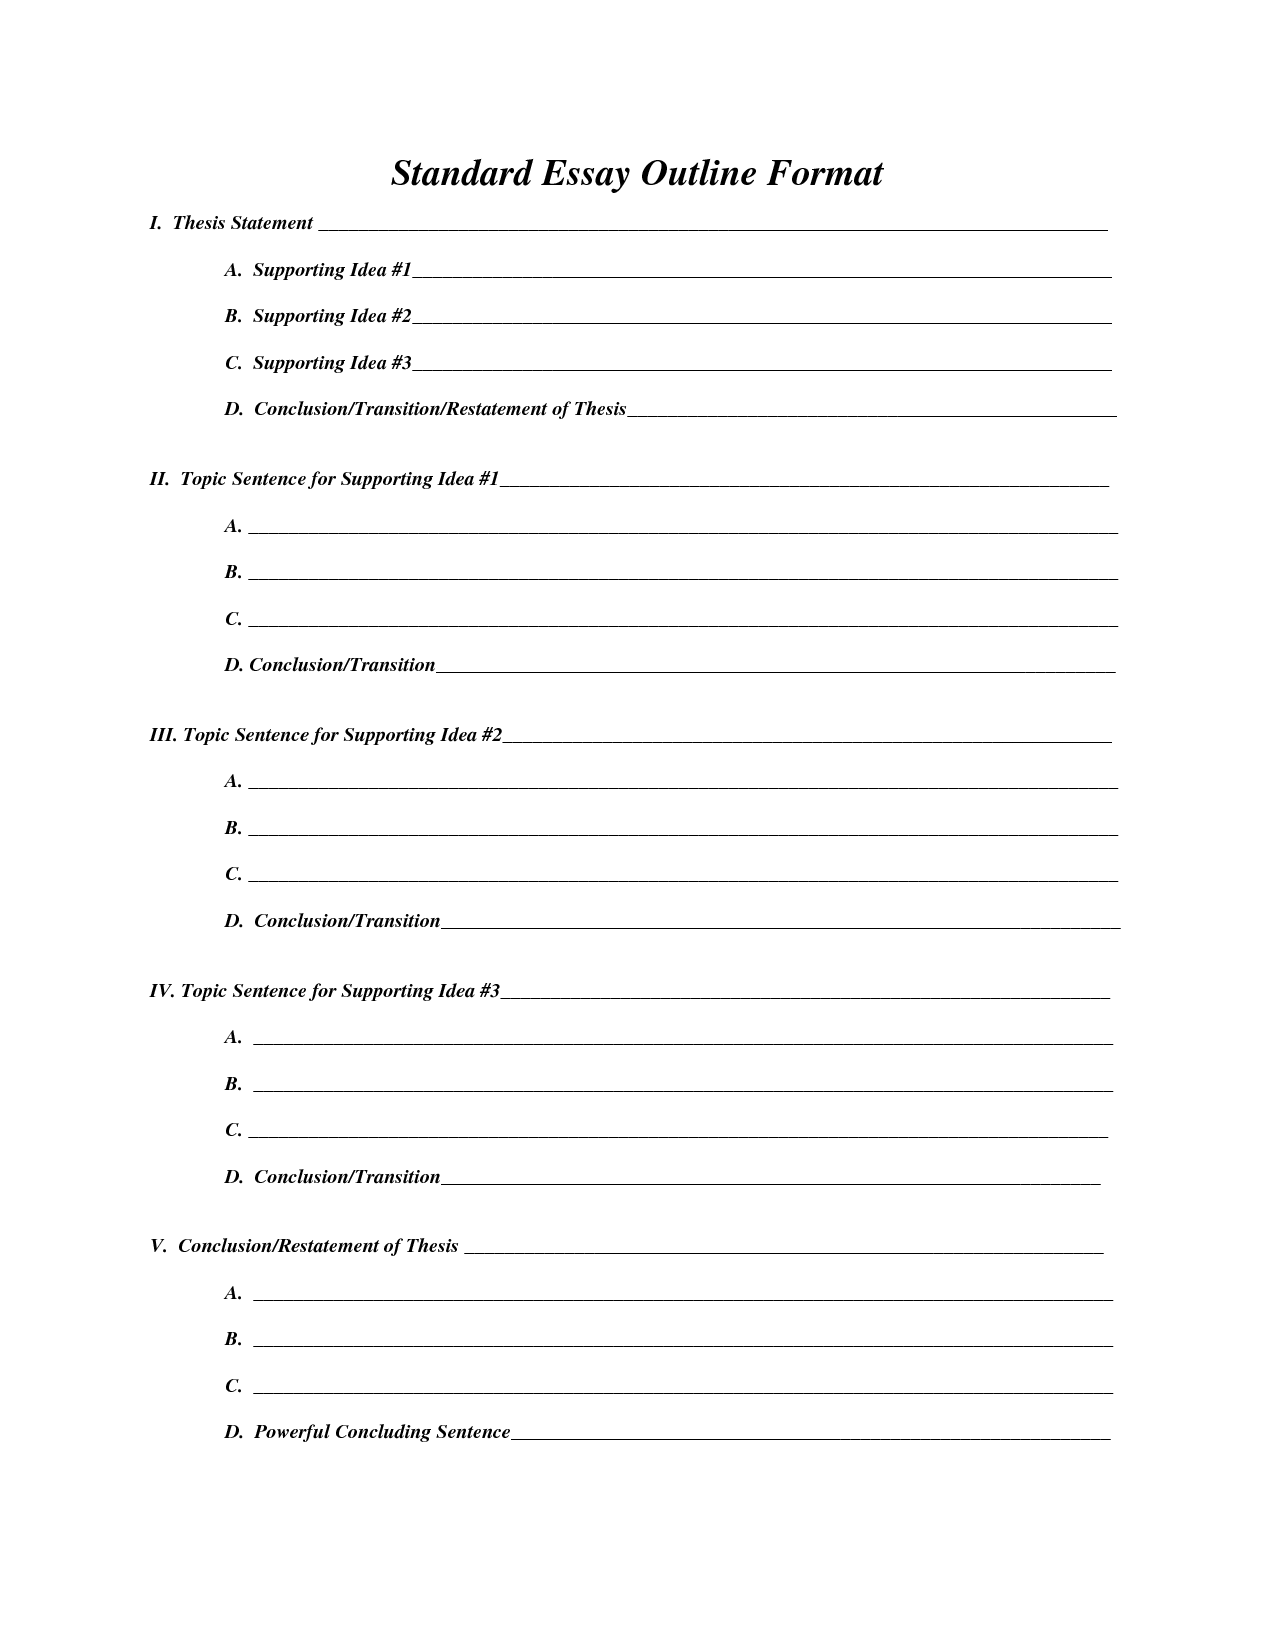 Blank essay outline sheet